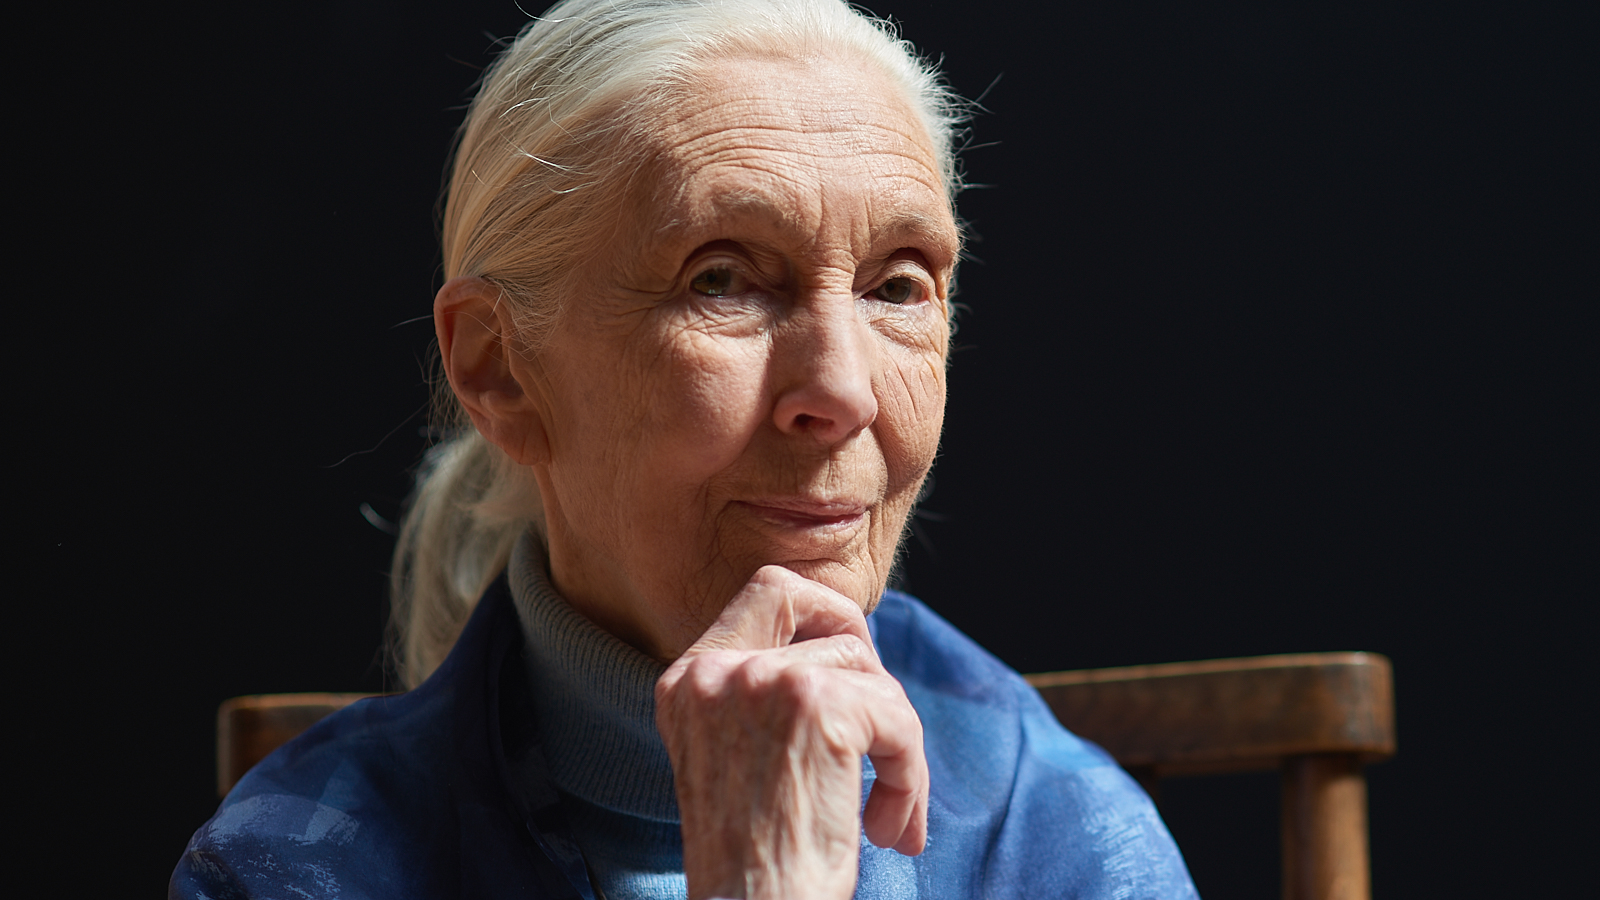 Dr. Jane Goodall Receives 2021 Templeton Prize, Biggest Single Award of